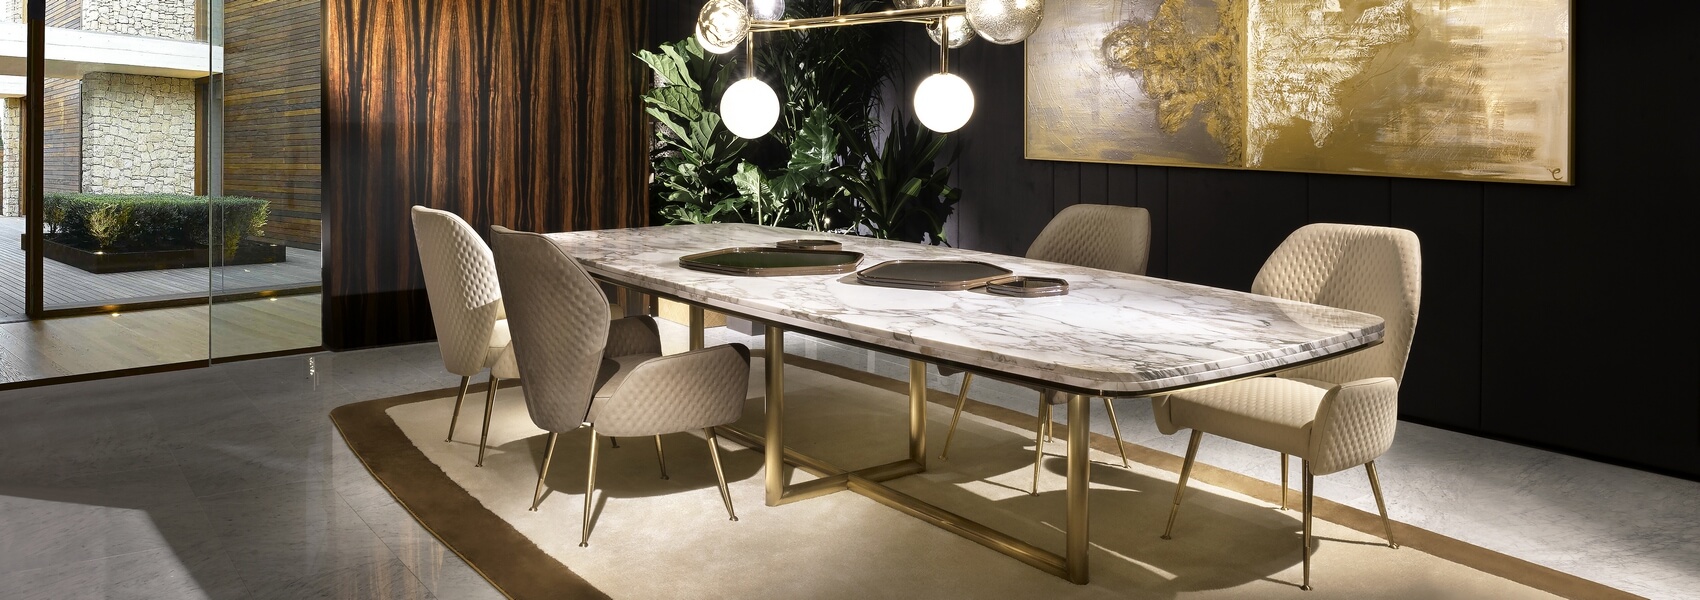 Elite Home | Luxury Furniture & Interiors in Miami / New York